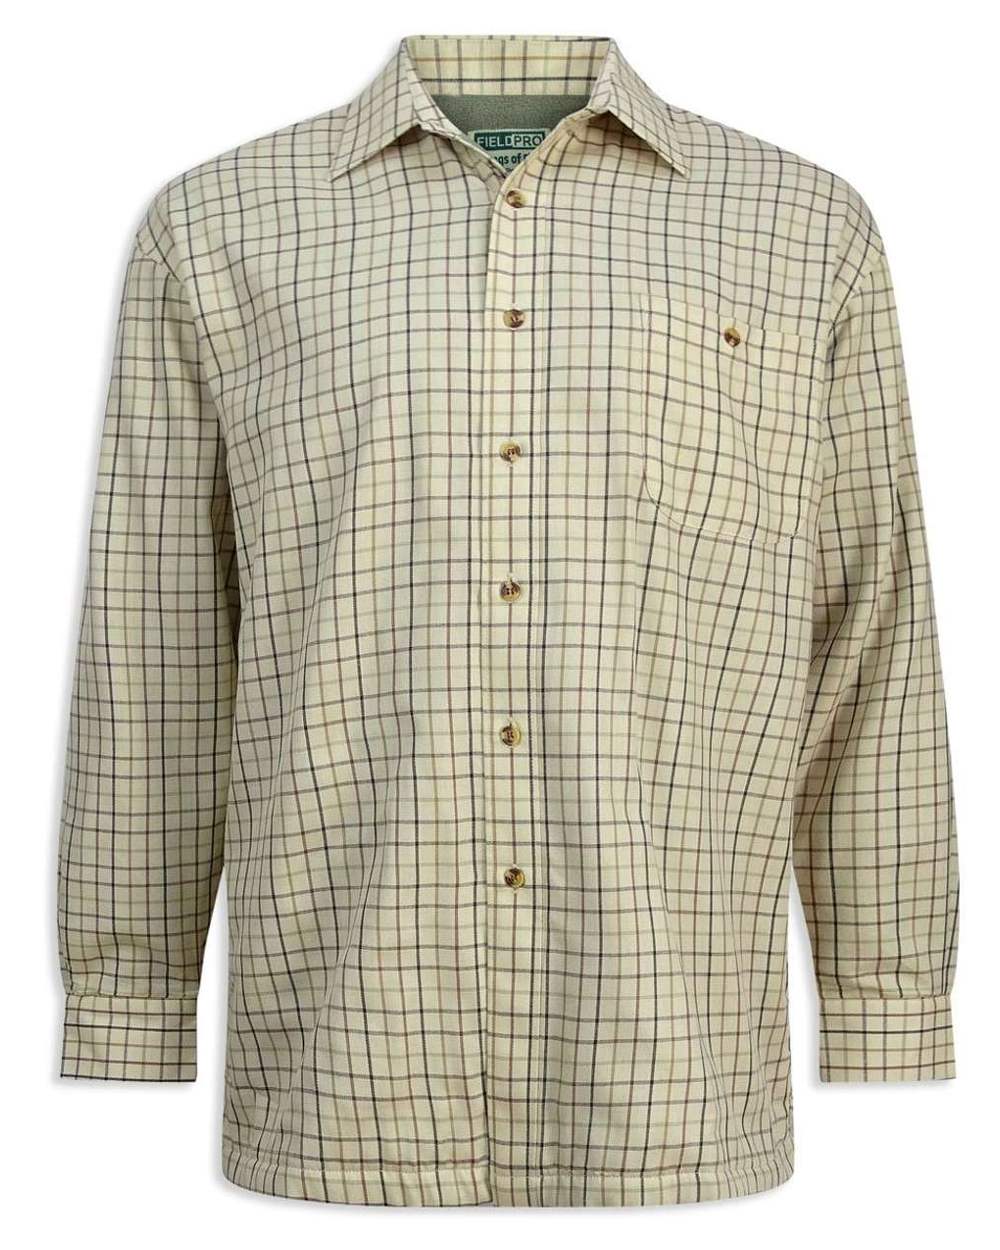 Hoggs of Fife Micro Fleece Lined Shirt in Birch 